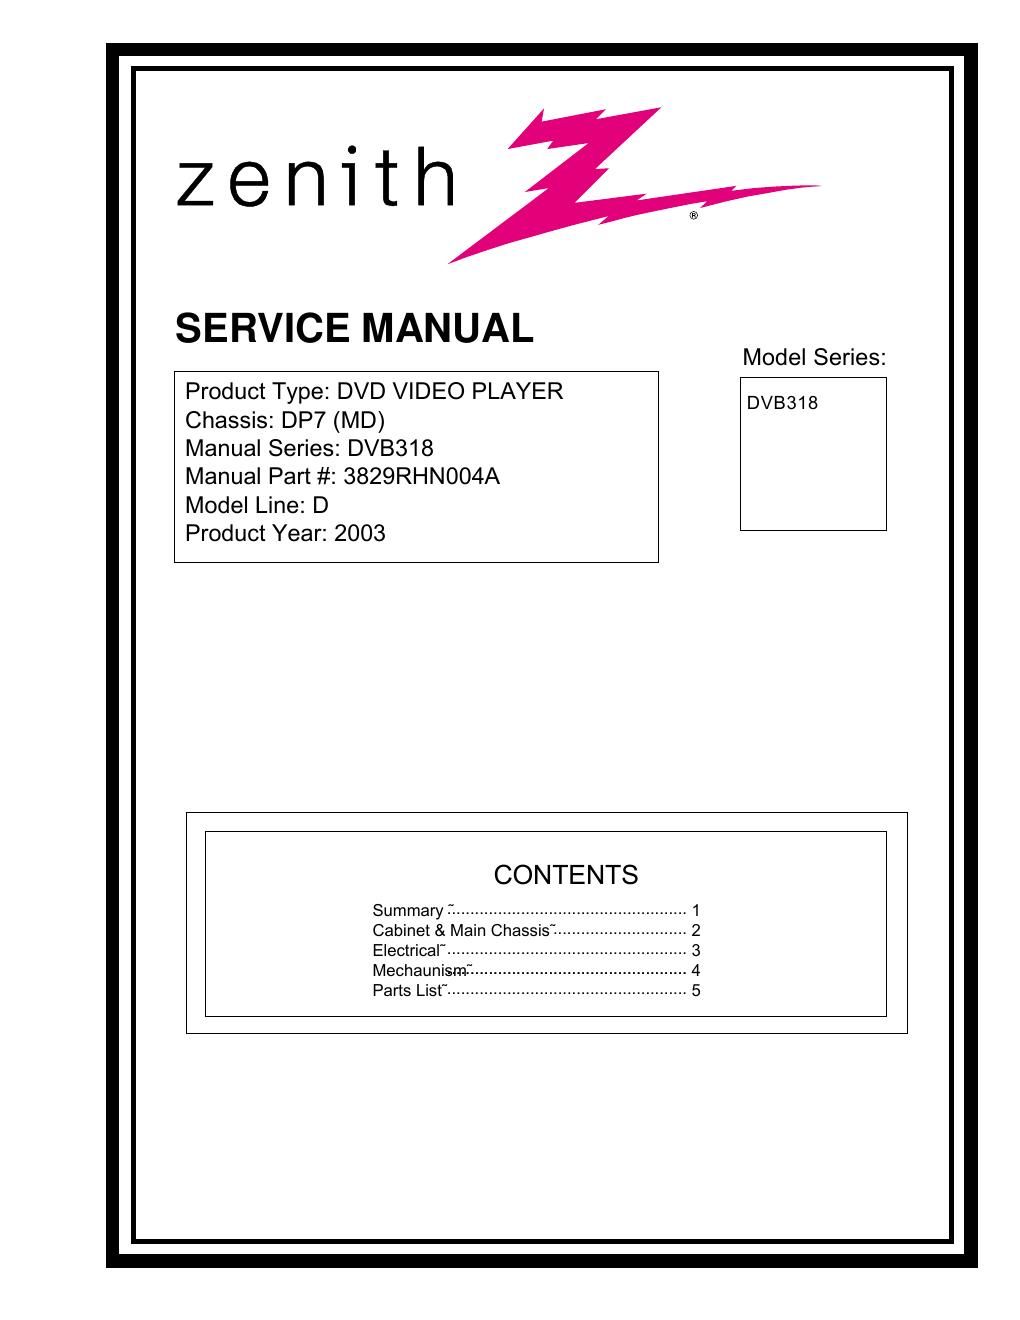 zenith dvb 318 service